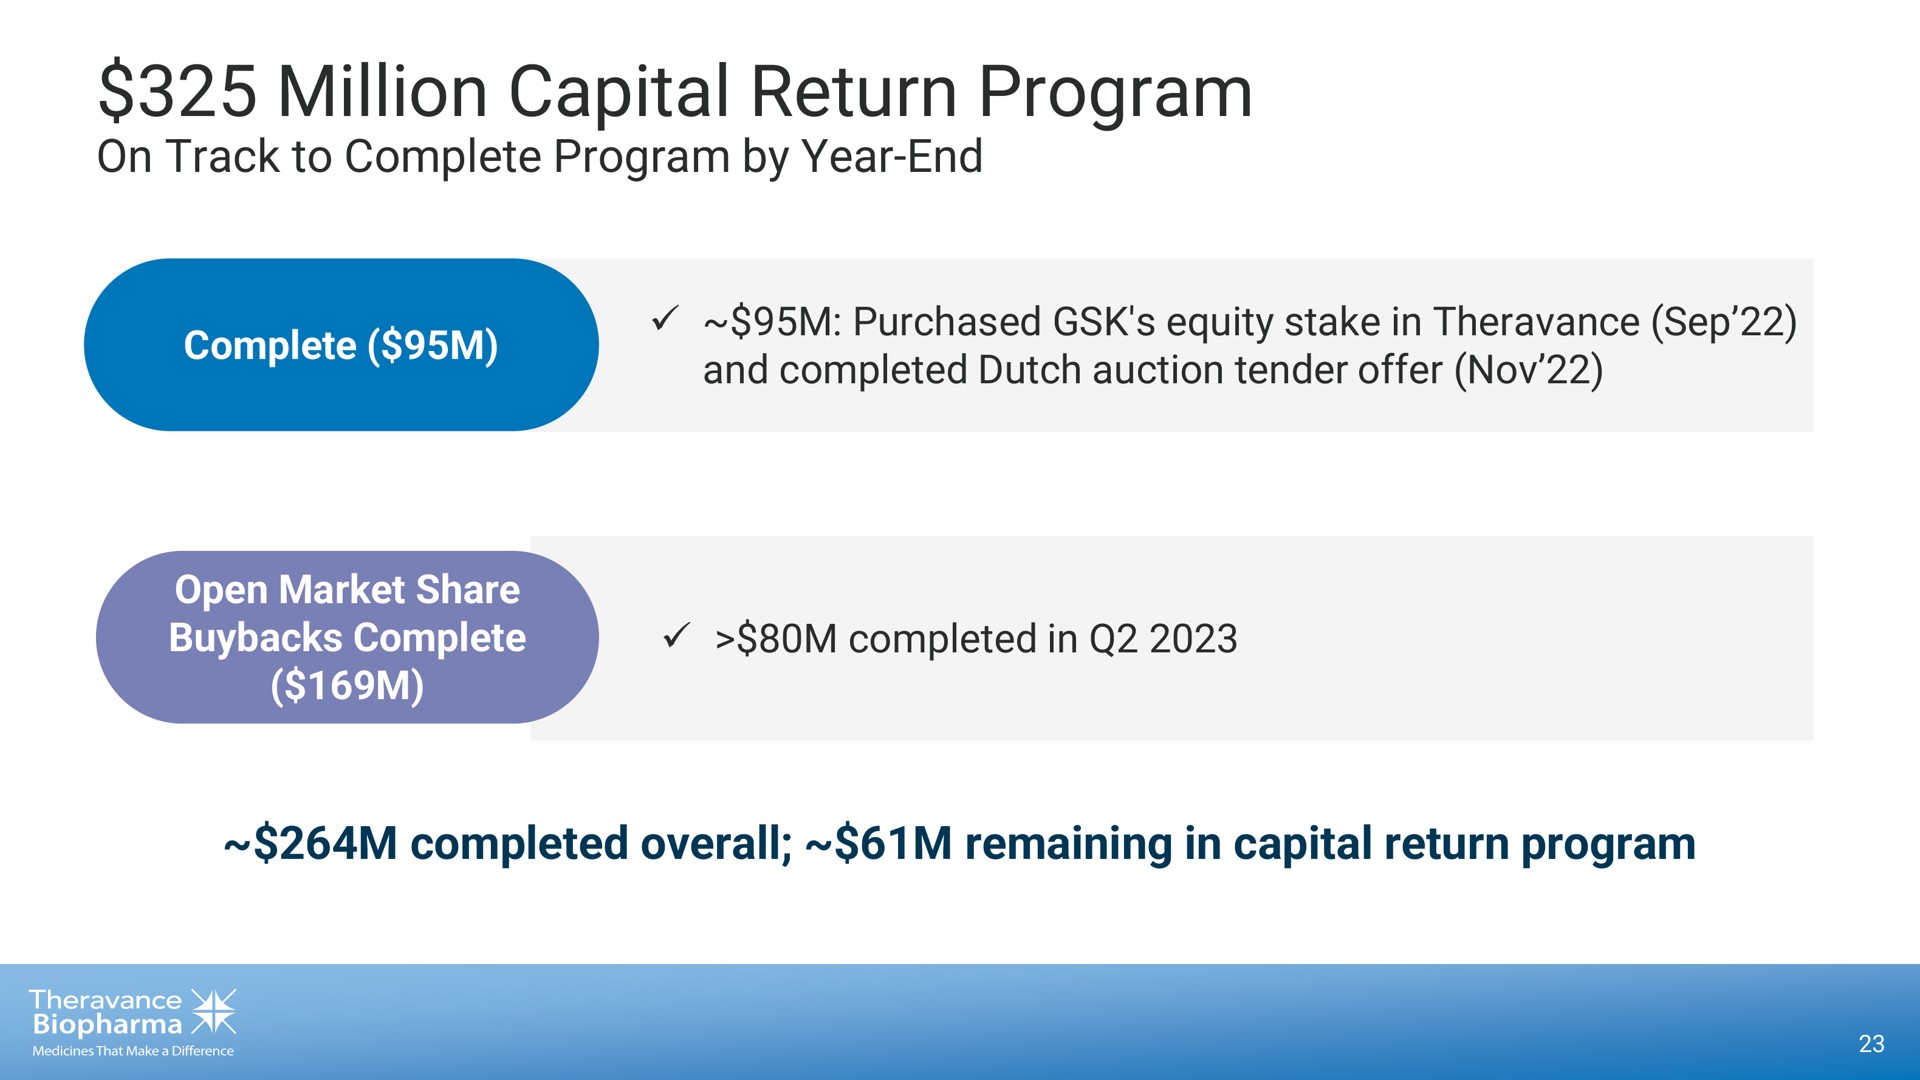 million capital return program | Theravance Biopharma